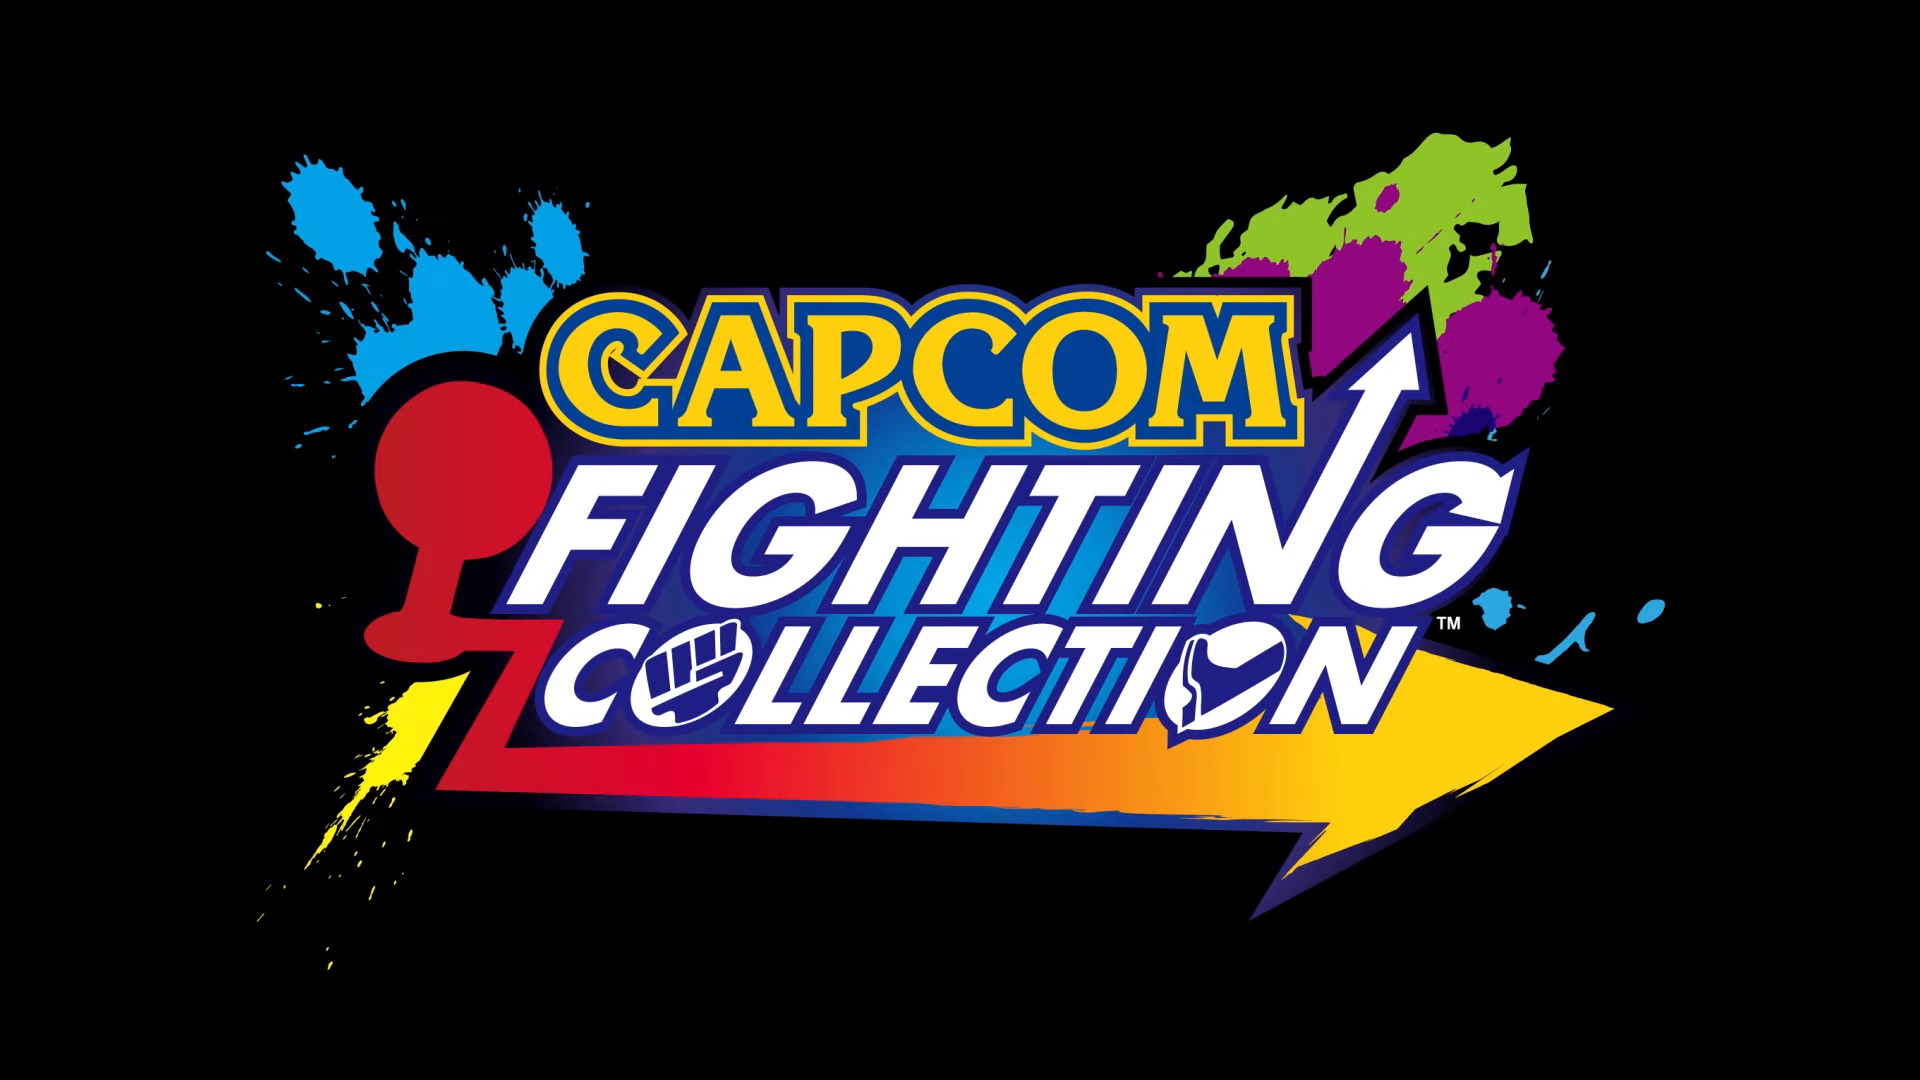 Capcom Fighting. Capcom Fighting collection. Игра Capcom Fighting collection. Capcom когда вышла.